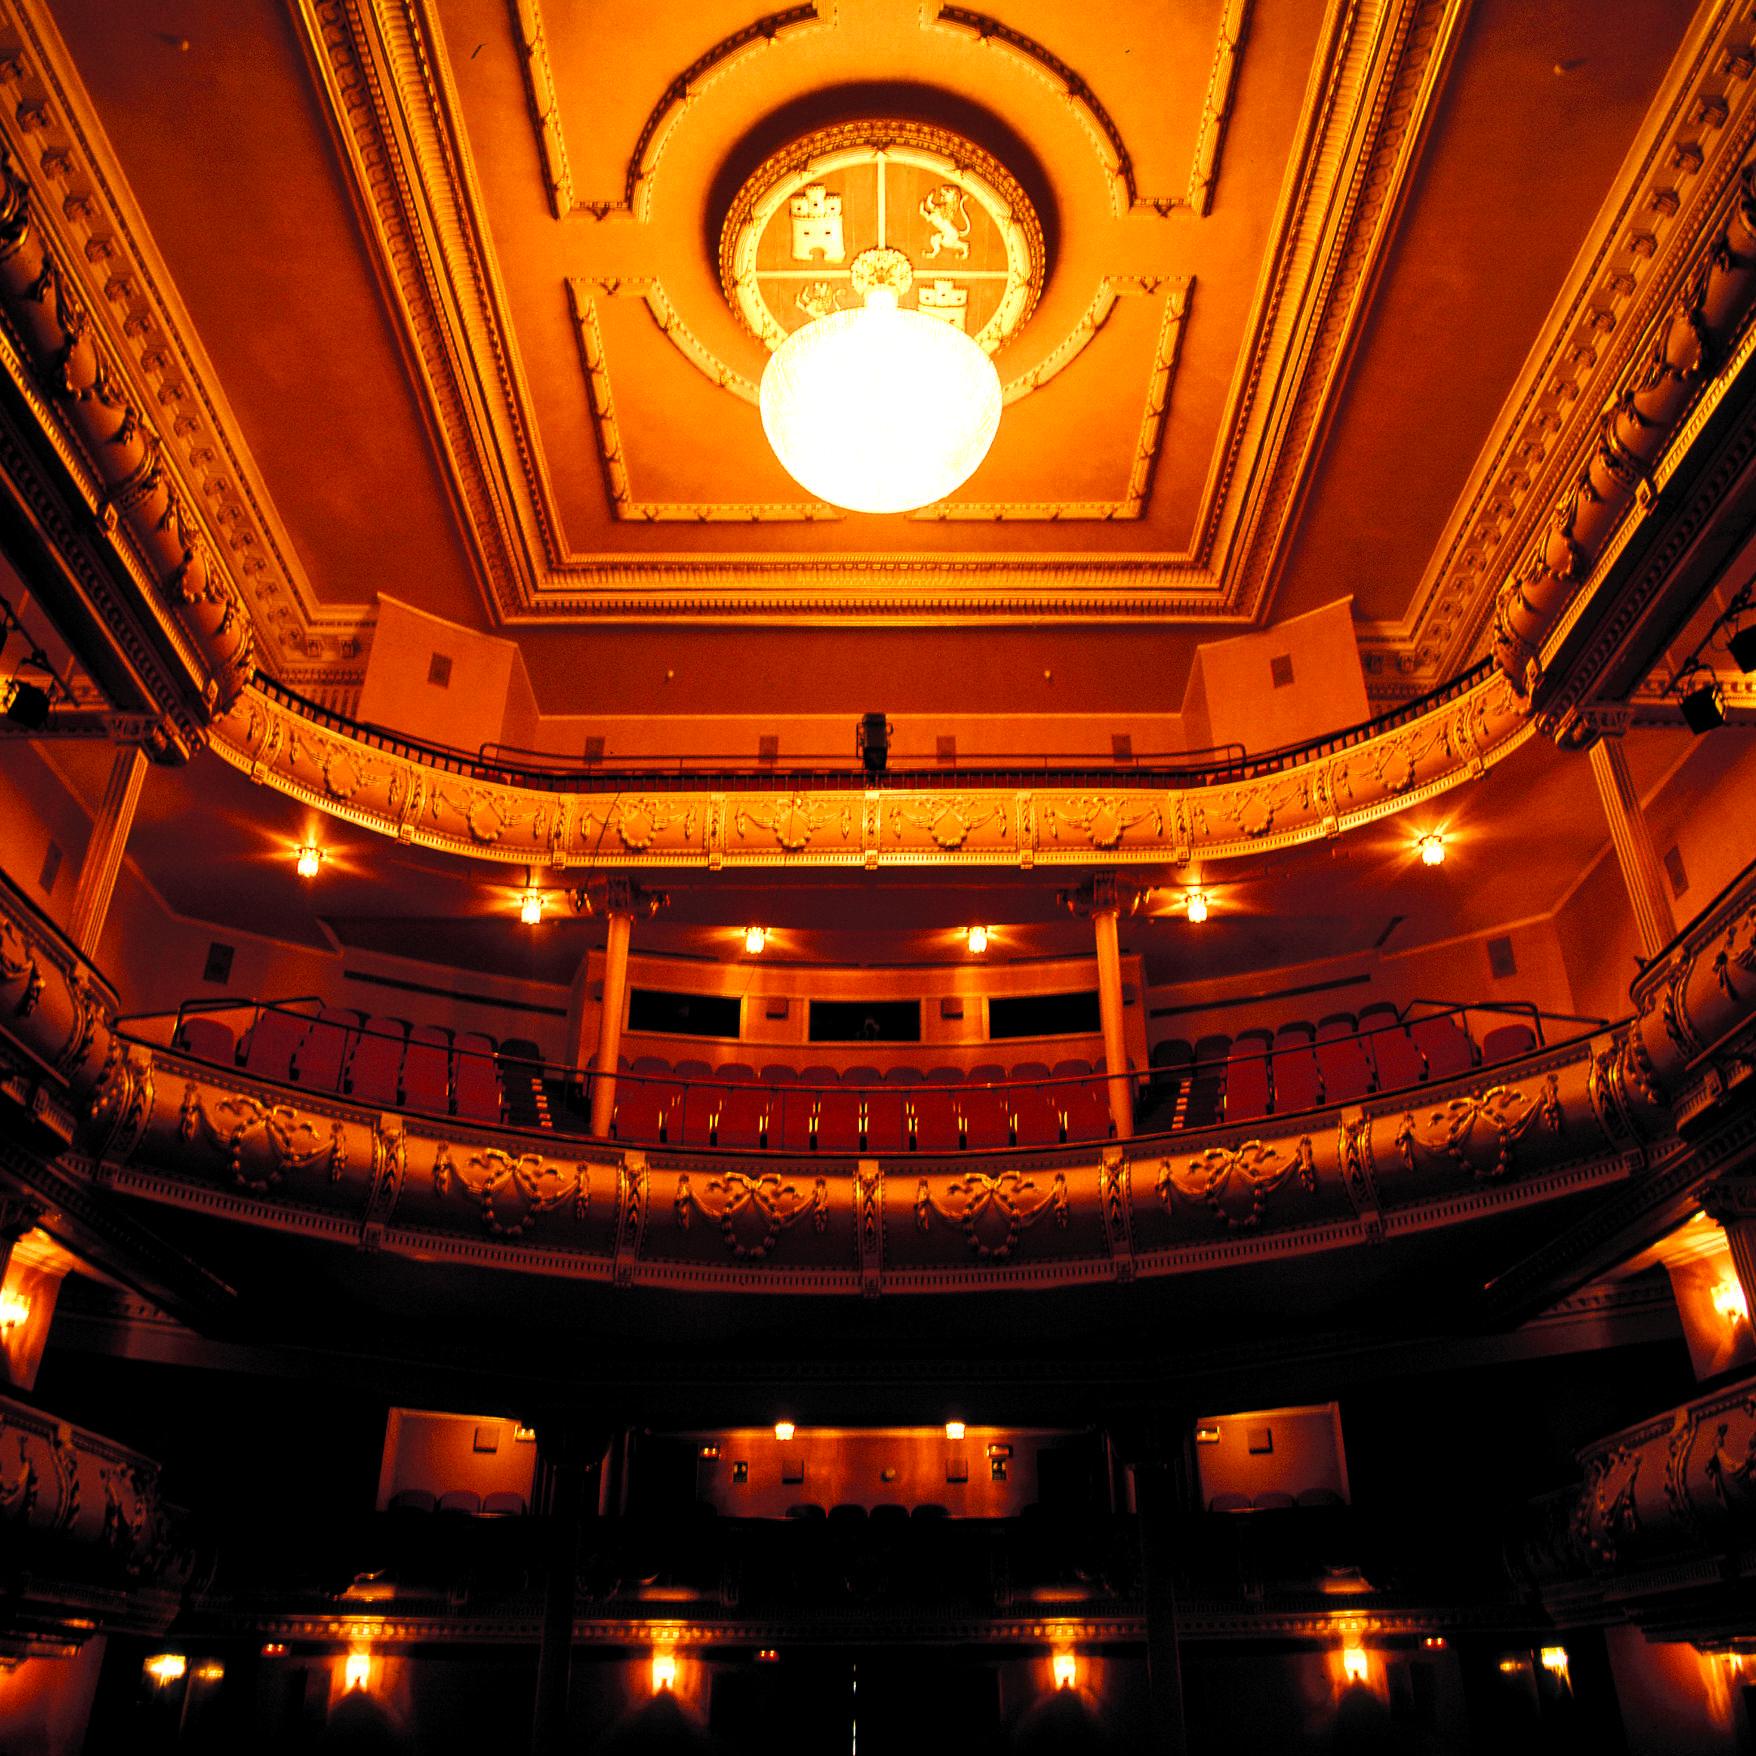 The Gran Teatro de Huelva offers an inclusive cultural experience with the play 'El Traje'.